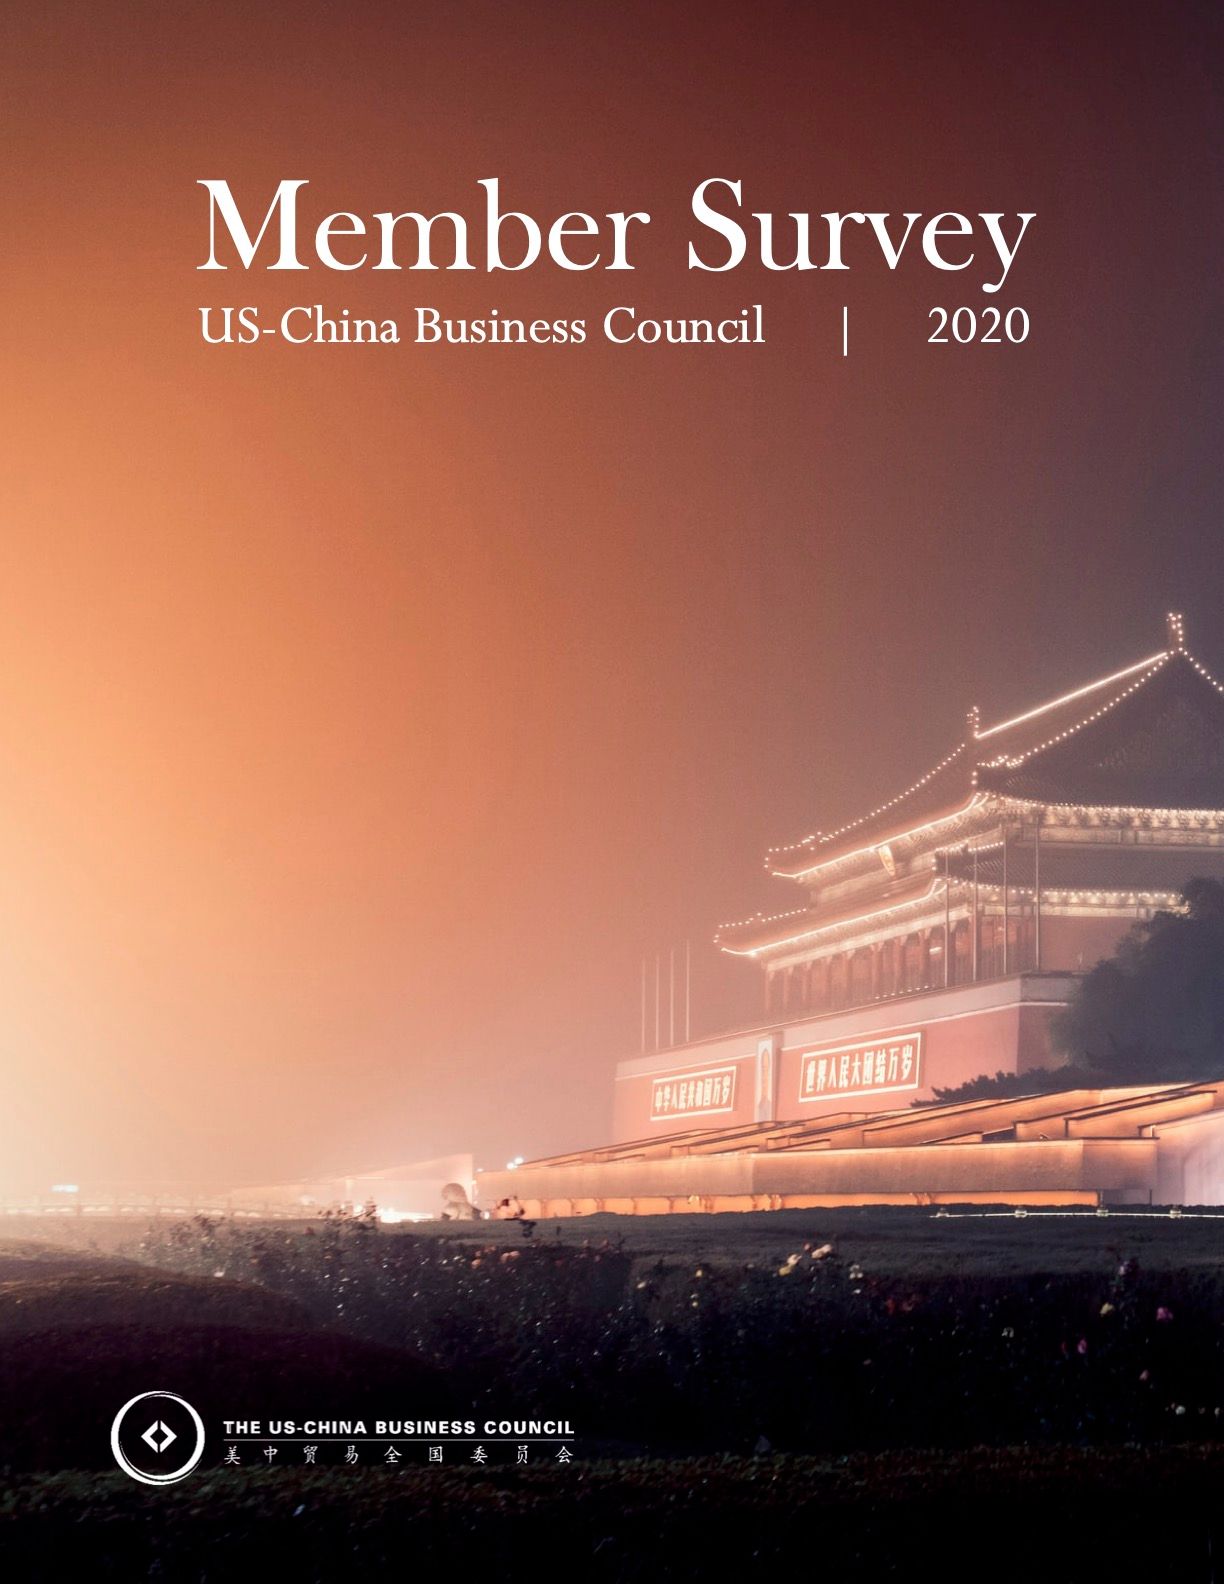 Member Survey US-China Business Council 2020